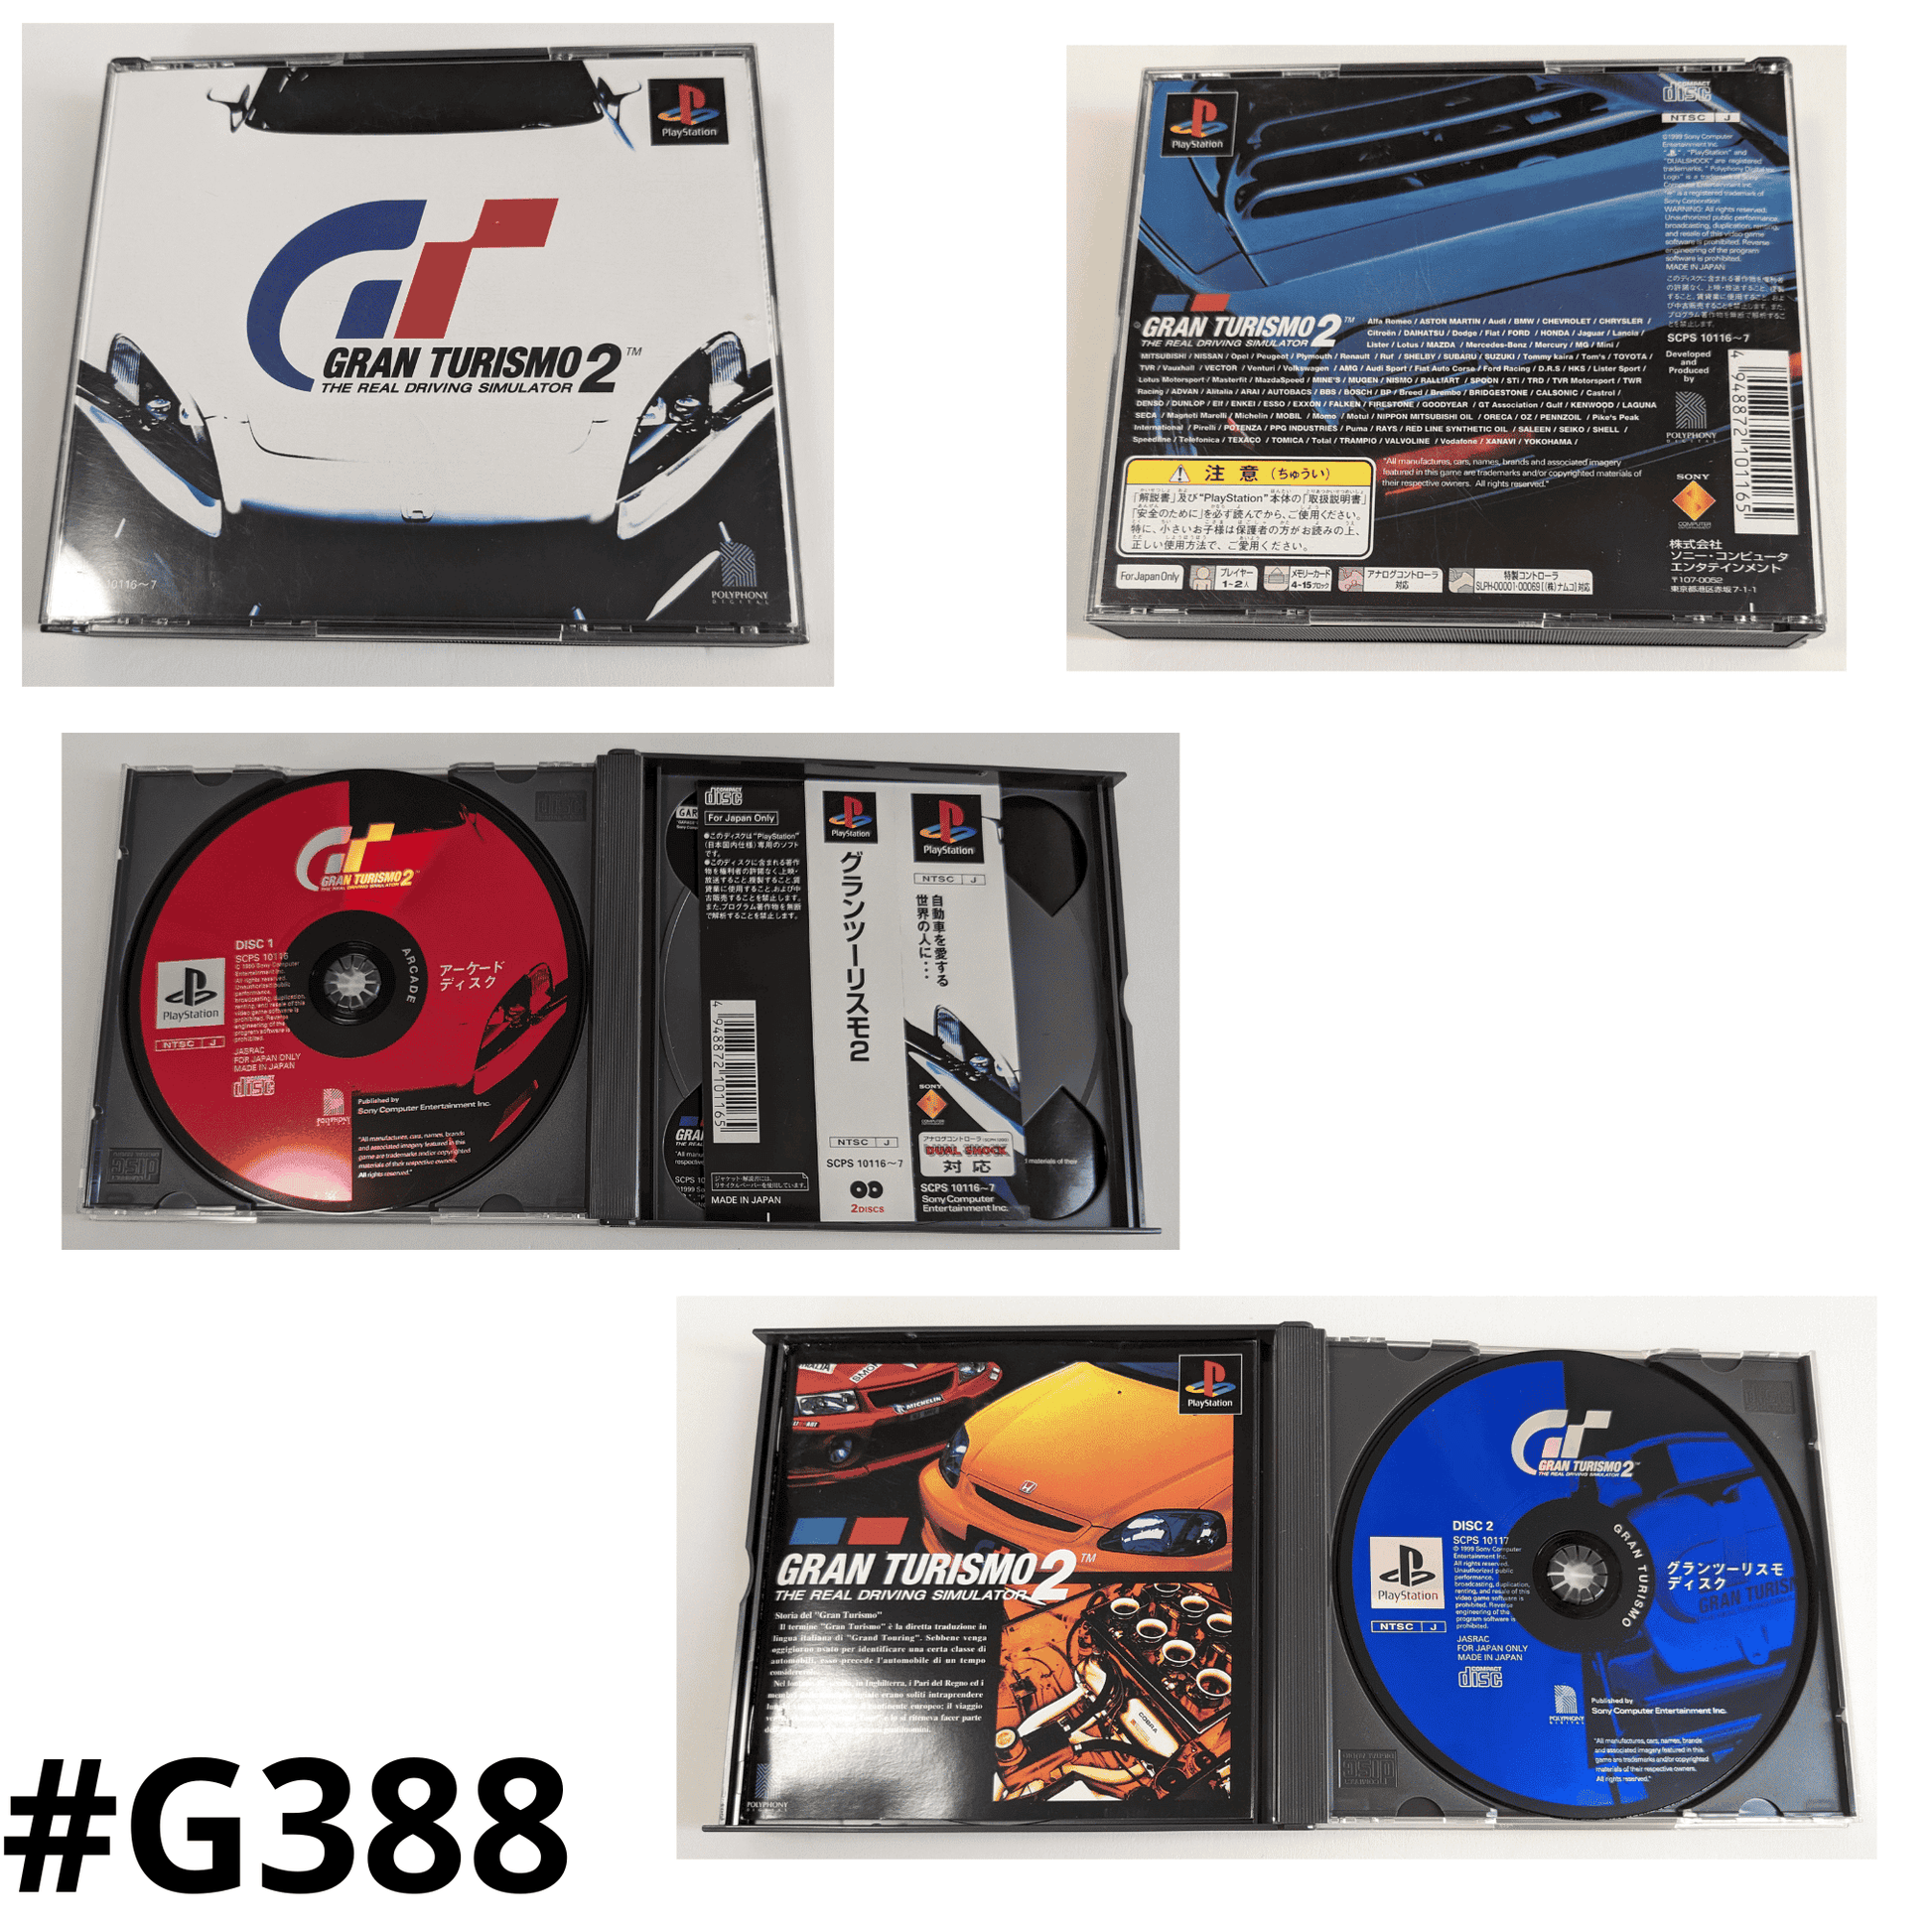 Grand Turismo 2  The Real Driving Simulator | PlayStation | Japonais ChitoroShop